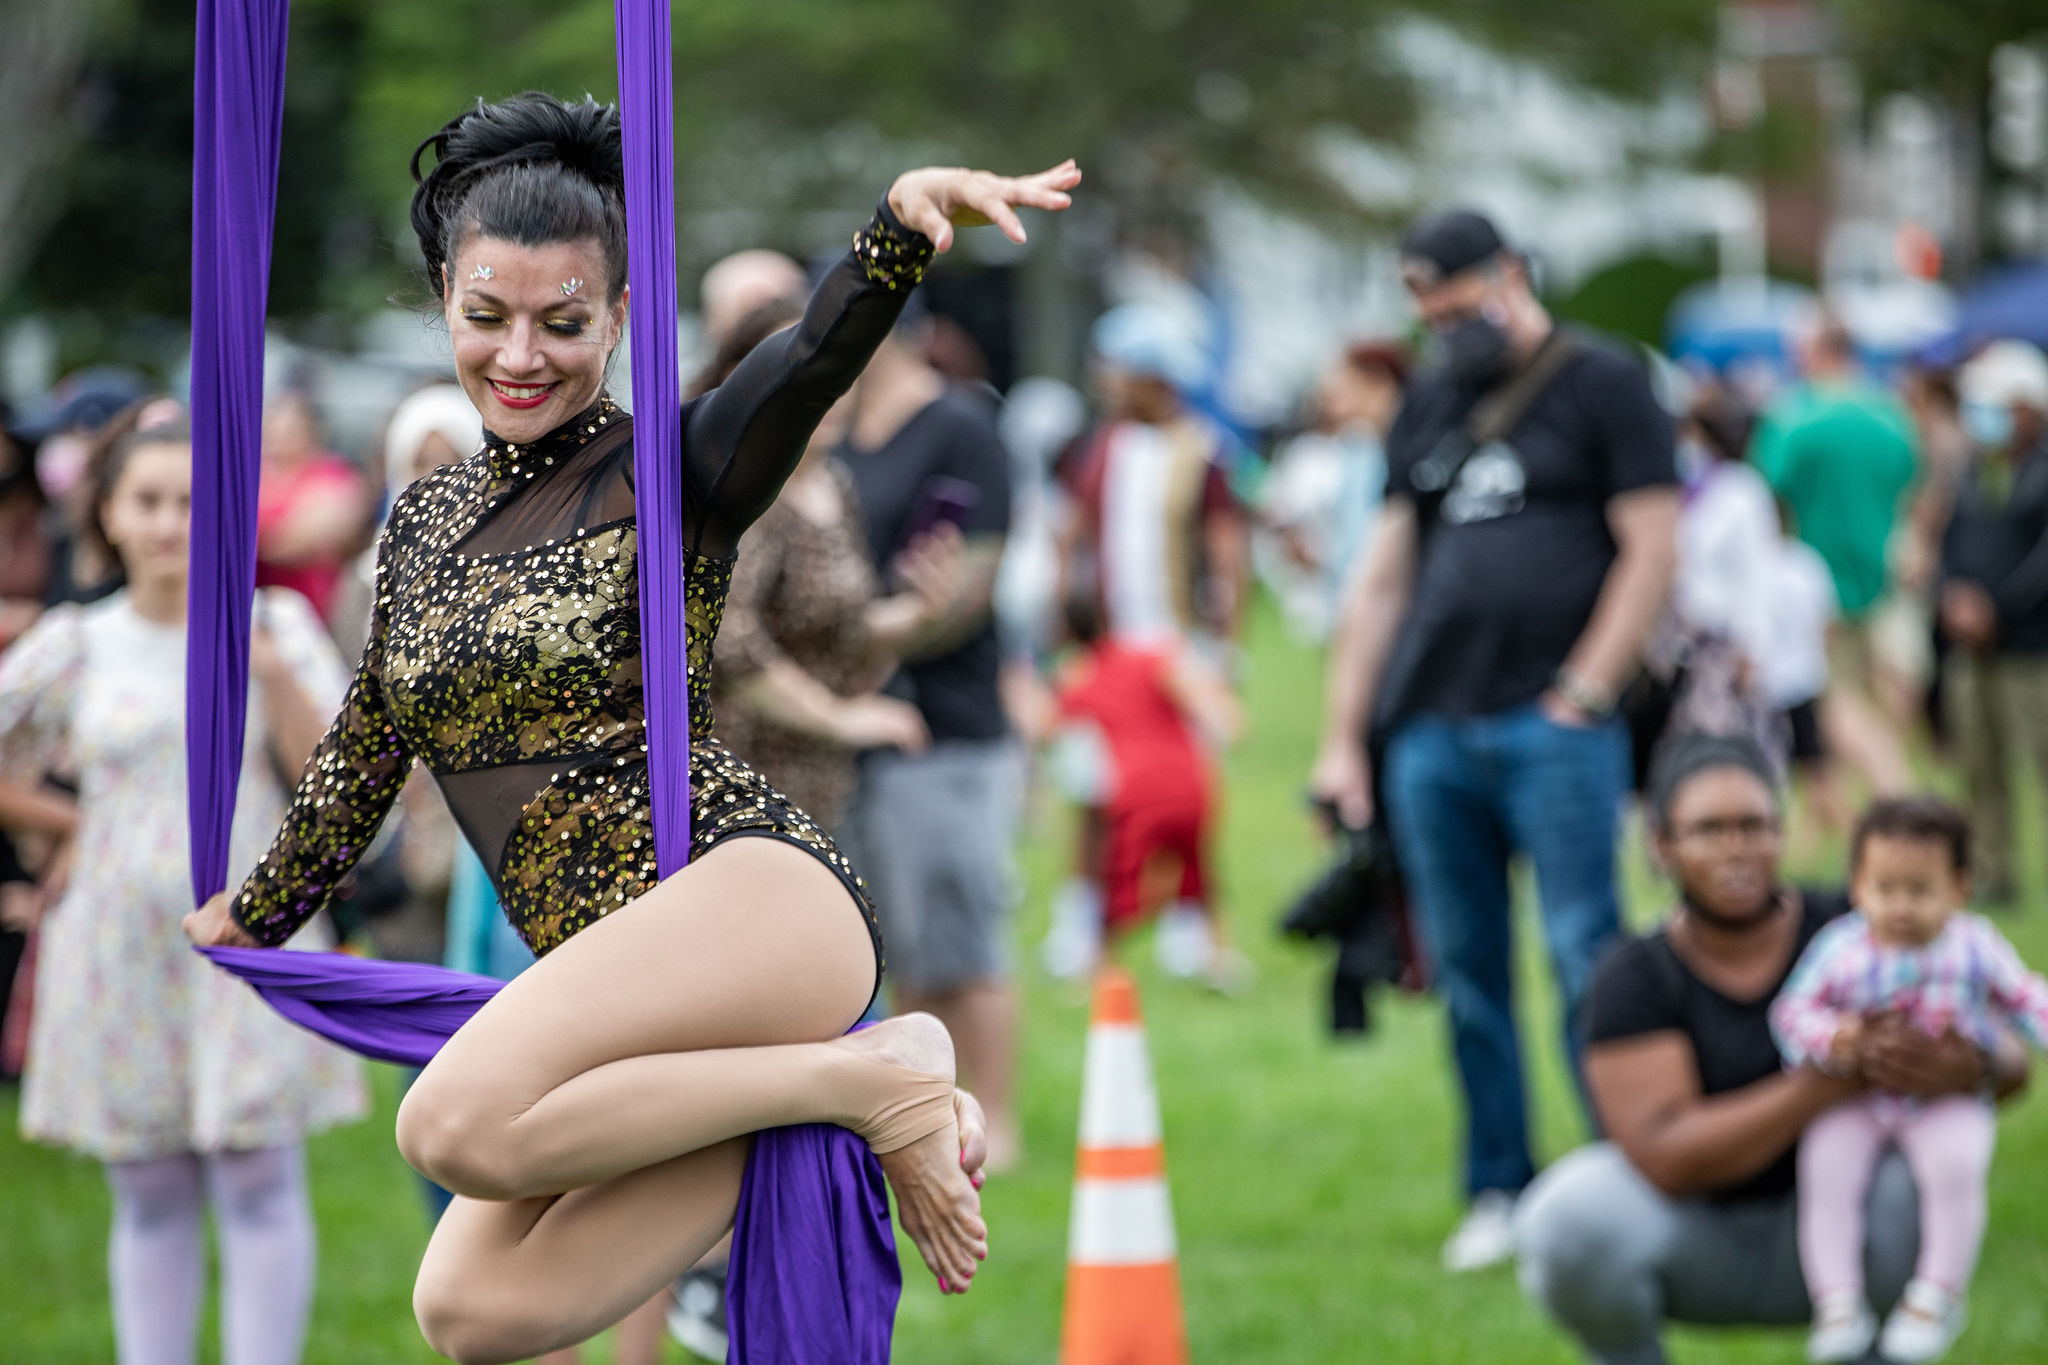 A woman performs acrobatics at a festival.